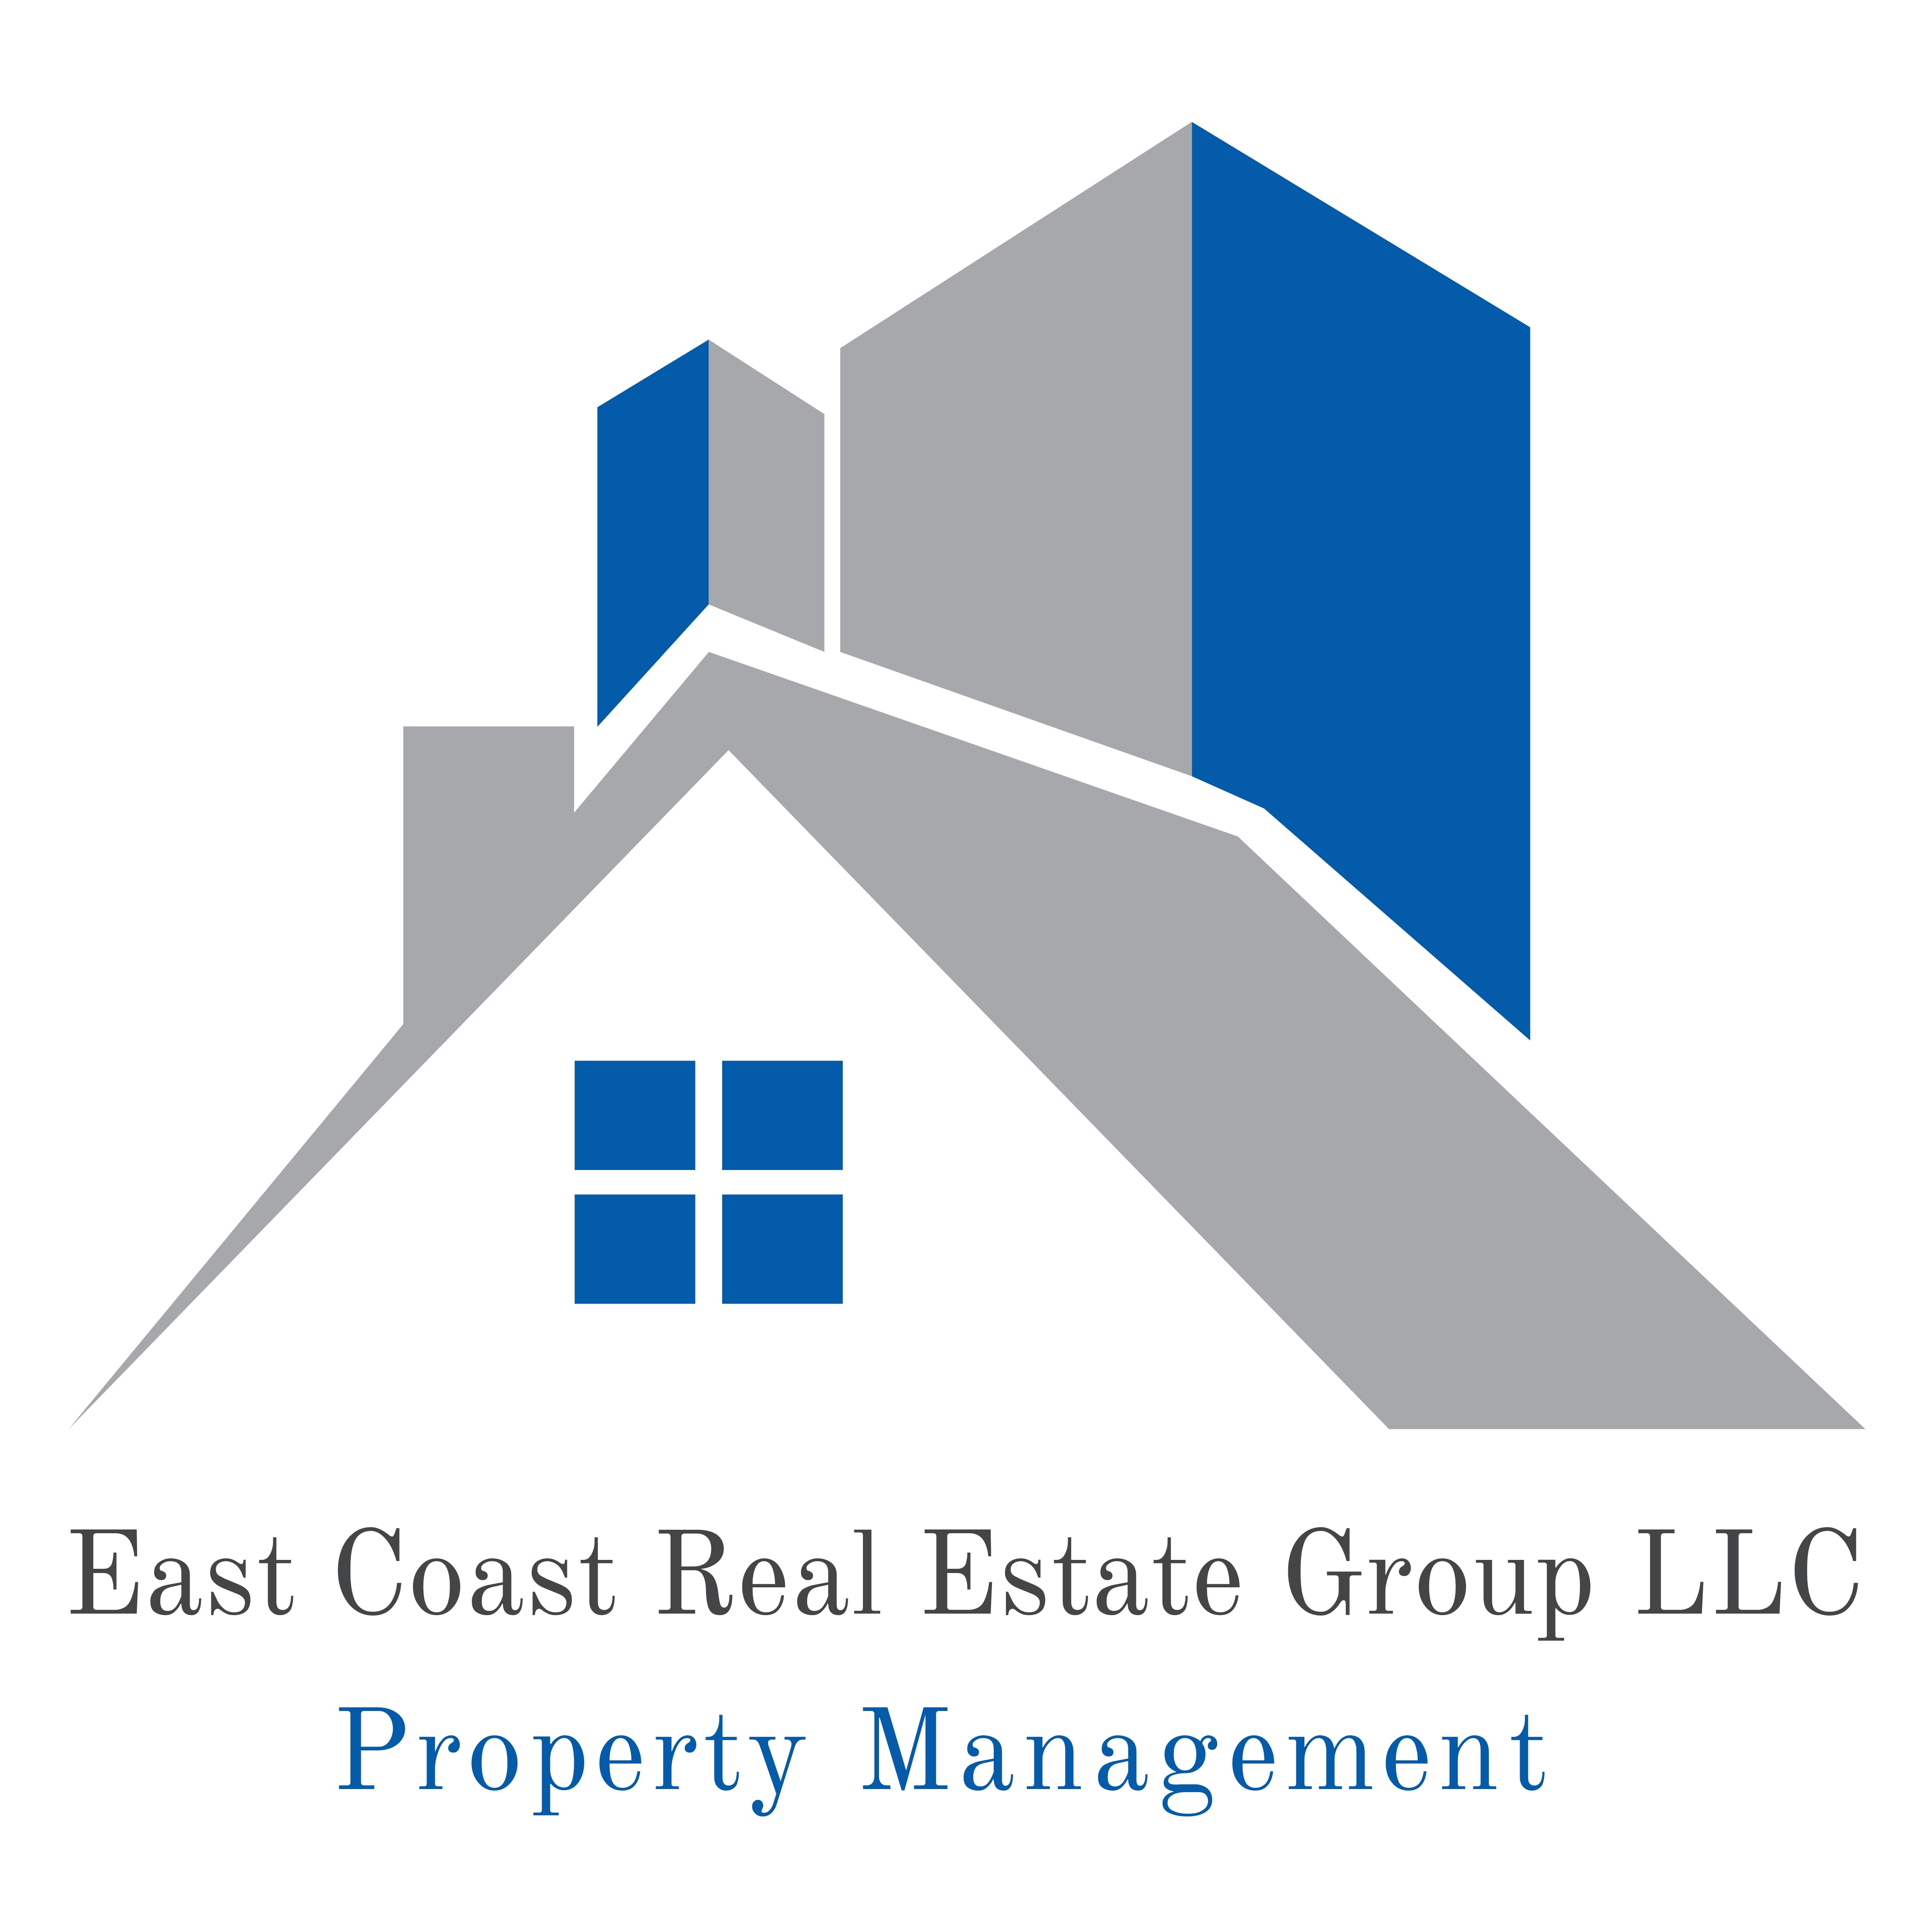 East Coast Real Estate Group LLC